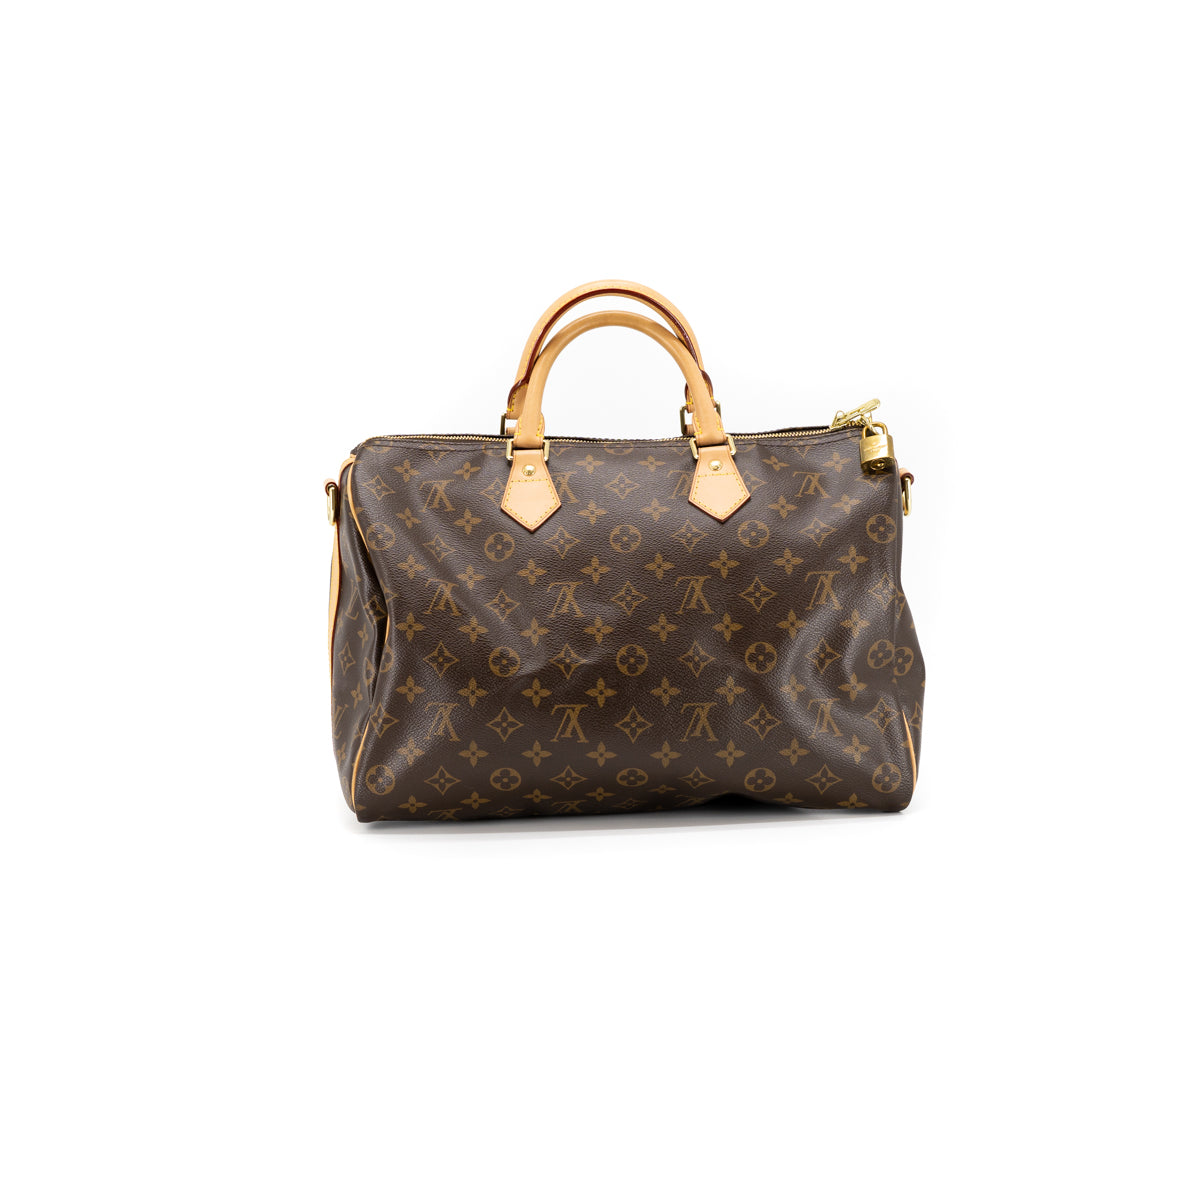  Louis Vuitton Speedy 35 Monogram New Model Doctor Style Handbag  BA0152  eBay